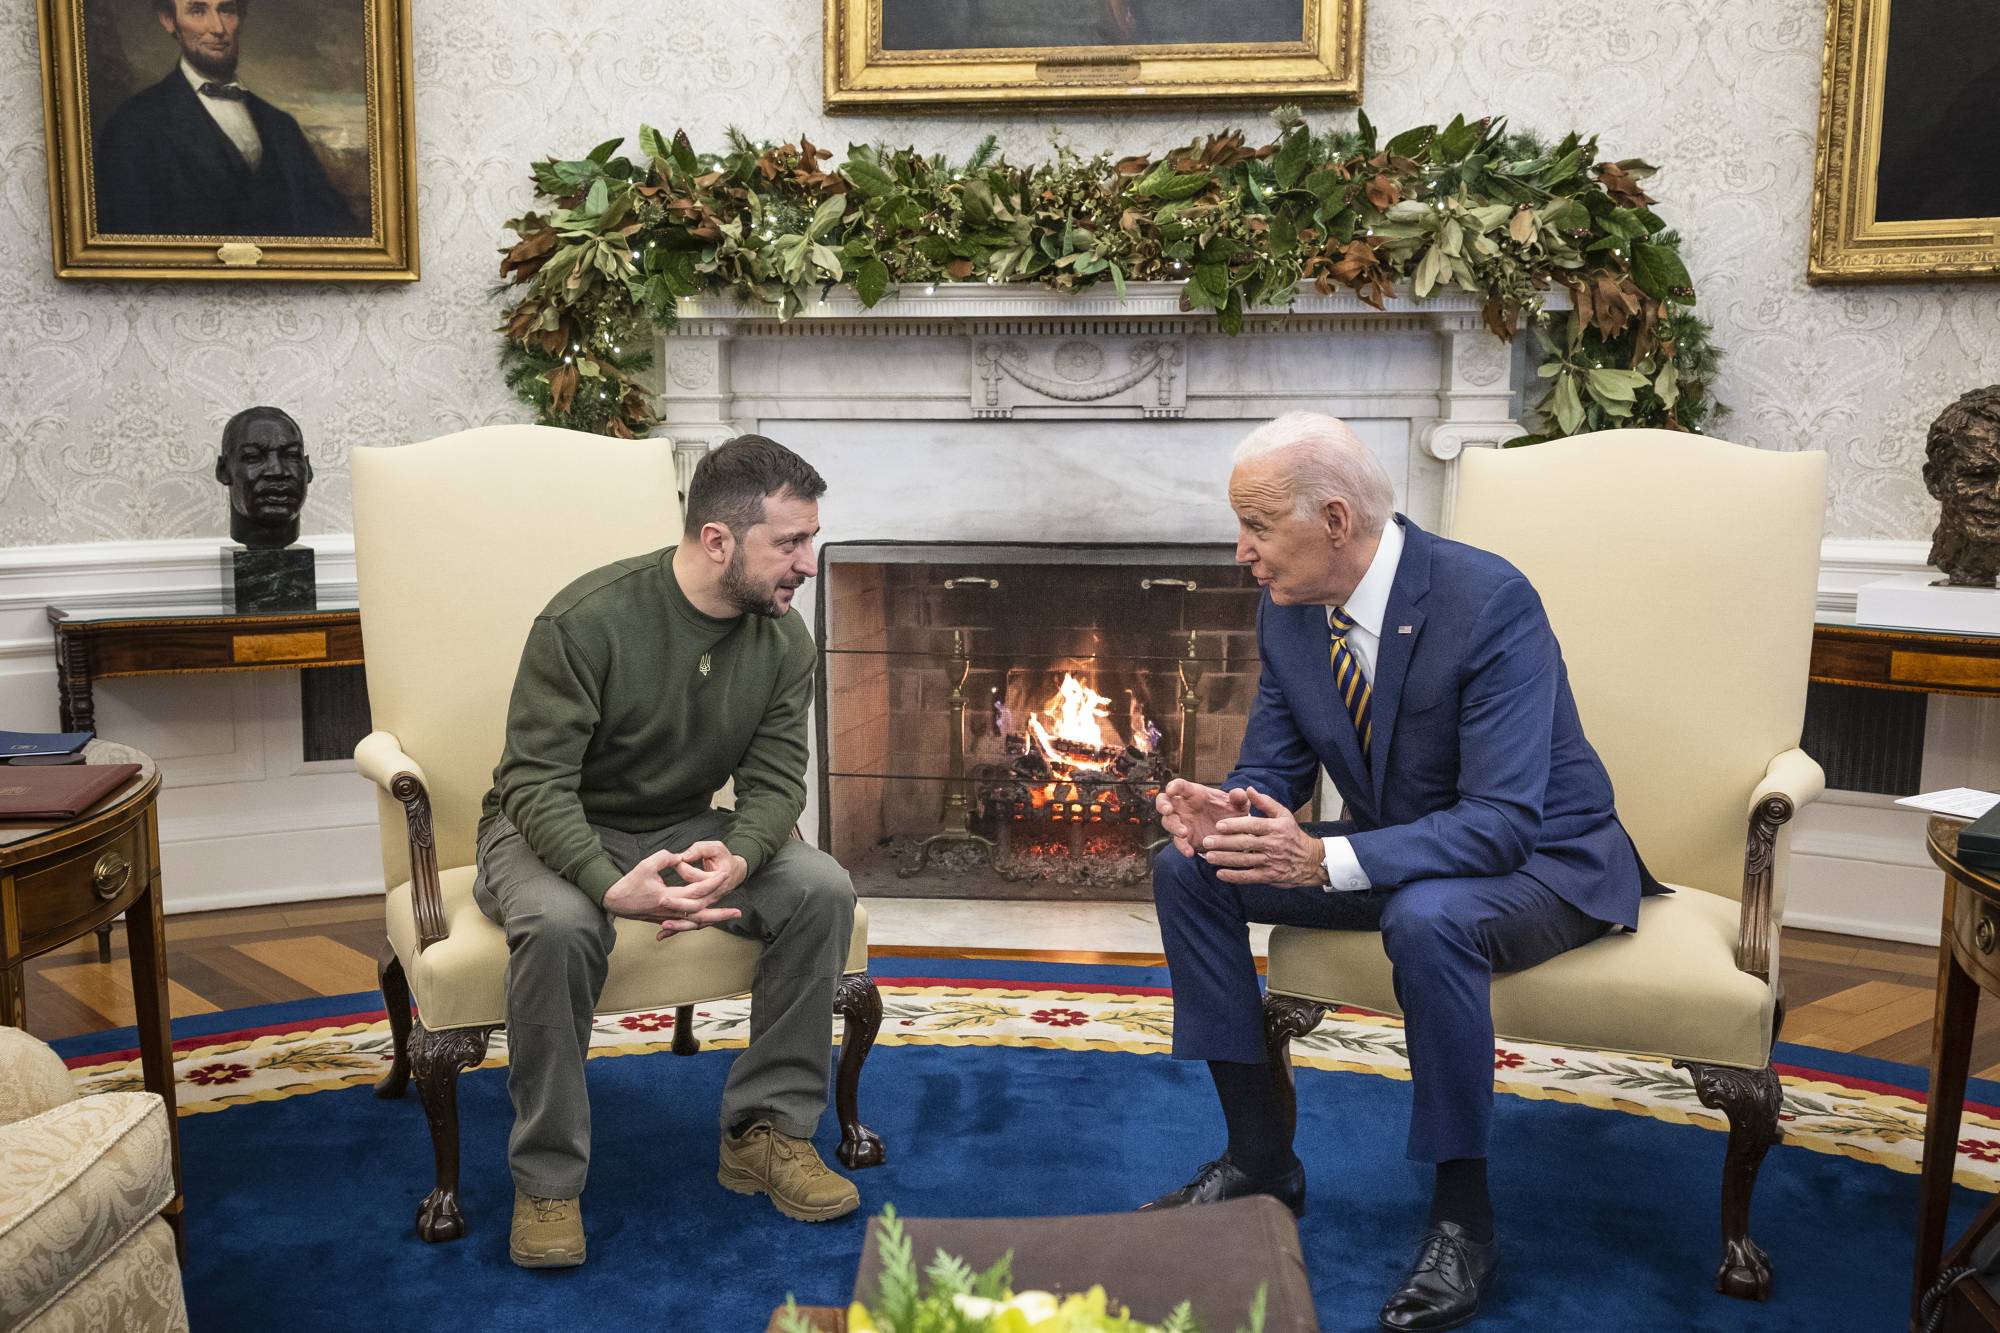 Zelenskyy and U.S. President Joe Biden meet in the Oval Office at the White House in Washington on Wednesday. | TOM BRENNER / THE NEW YORK TIMES